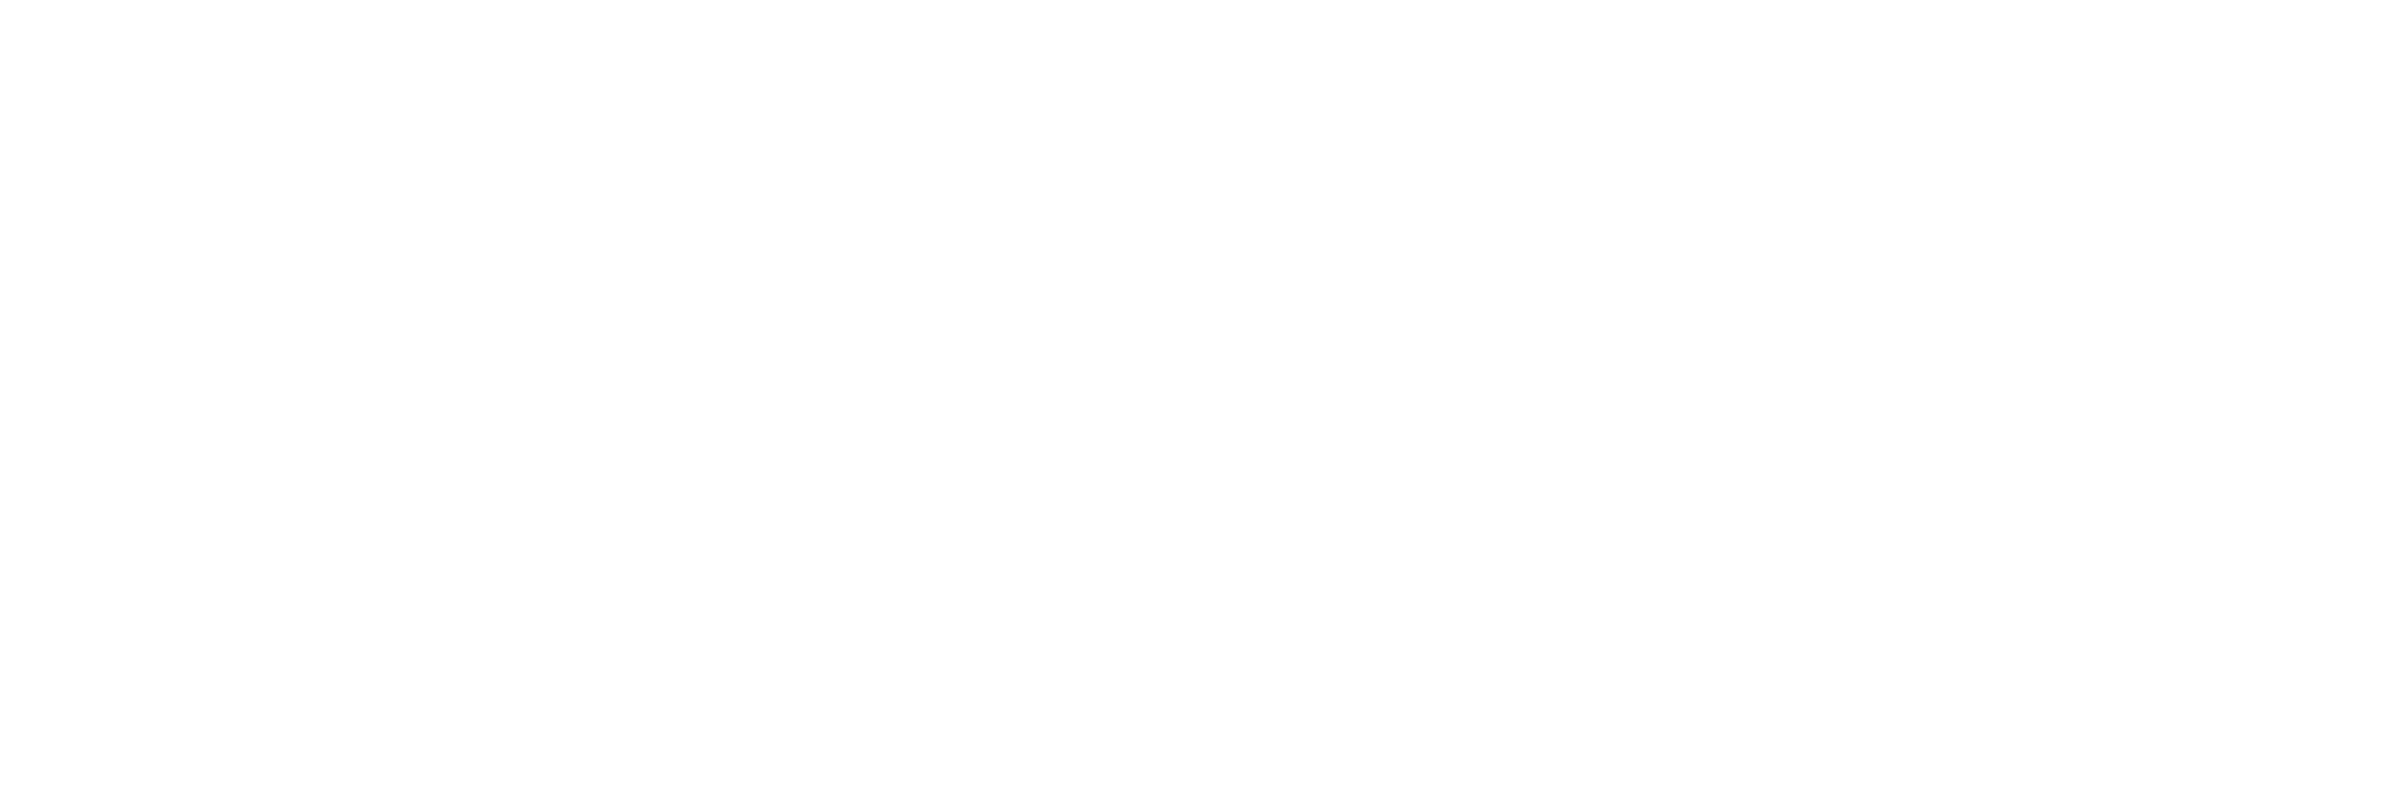 White version of the Hatchet Hardware logo